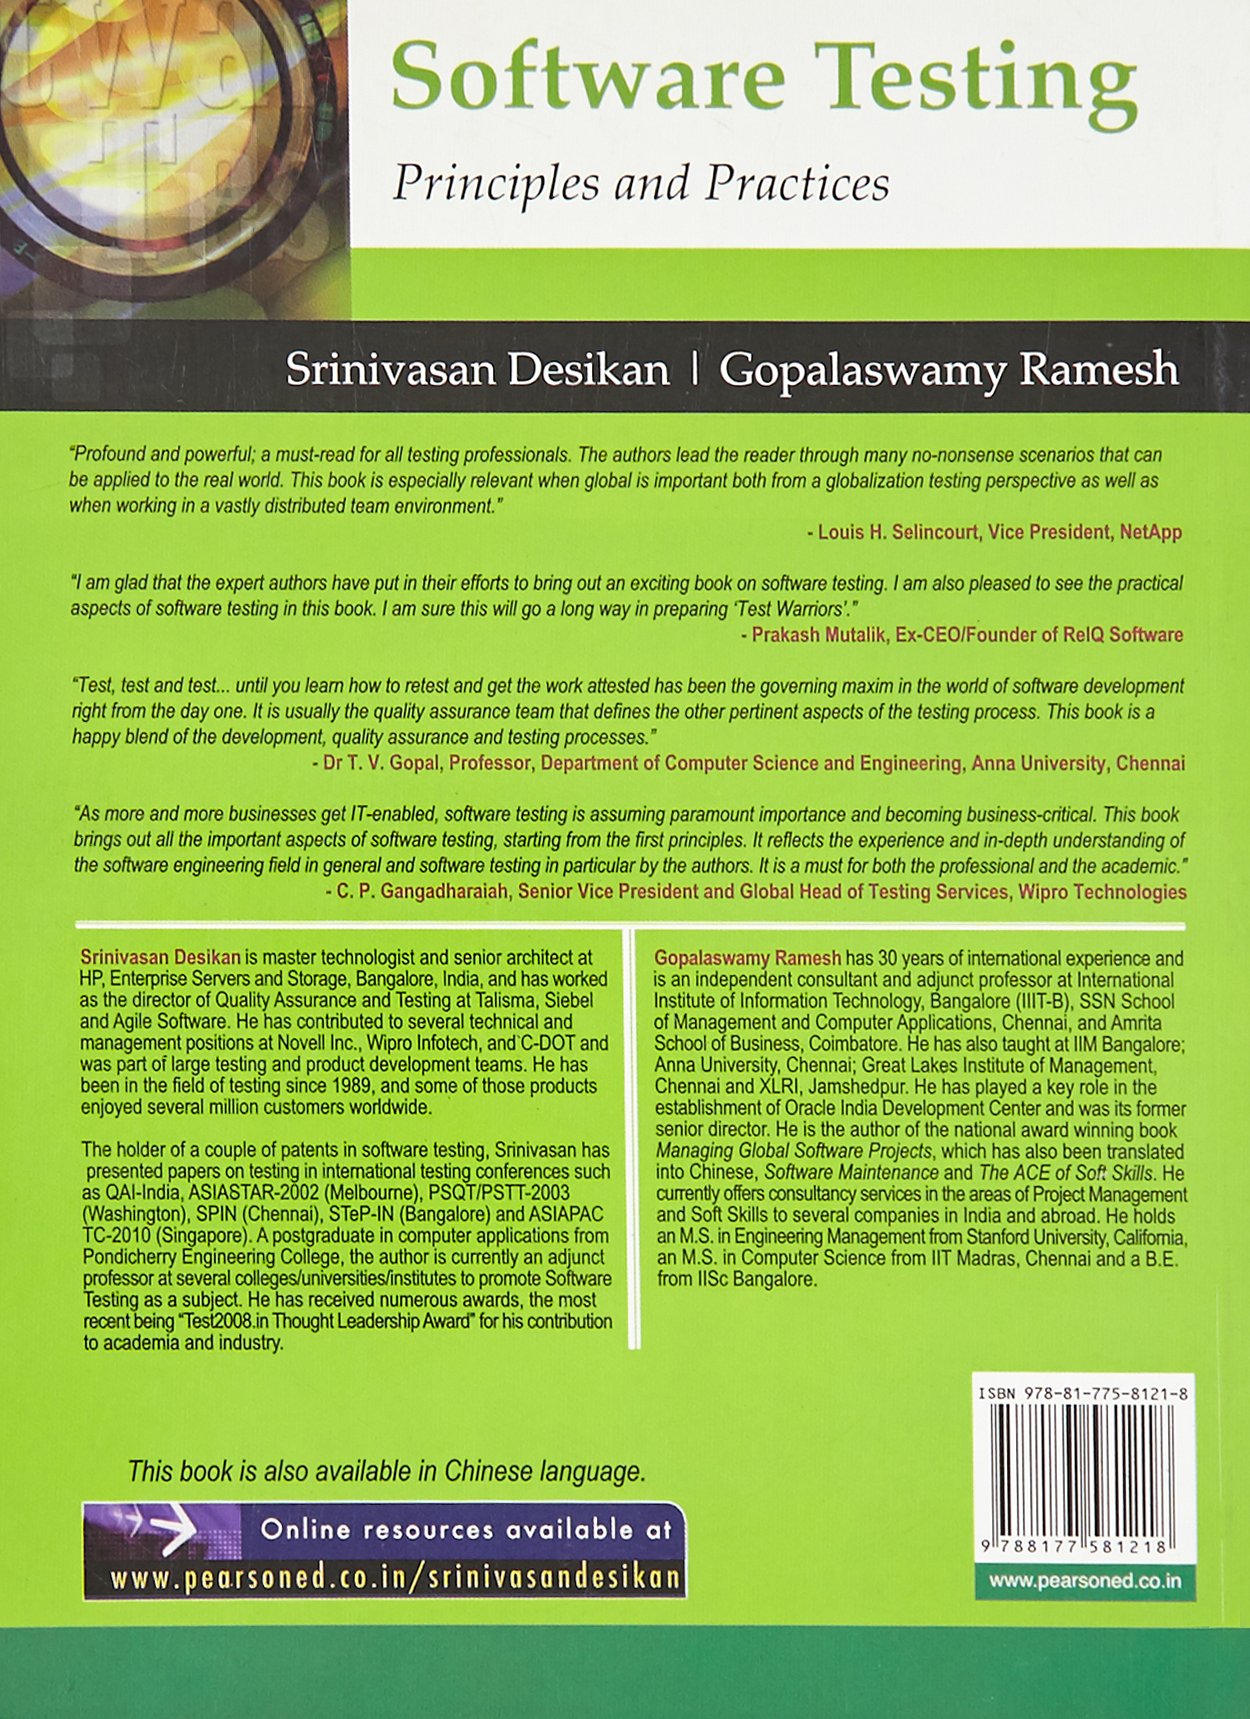 Software Testing Book By Srinivasan Desikan Pdf Free Download